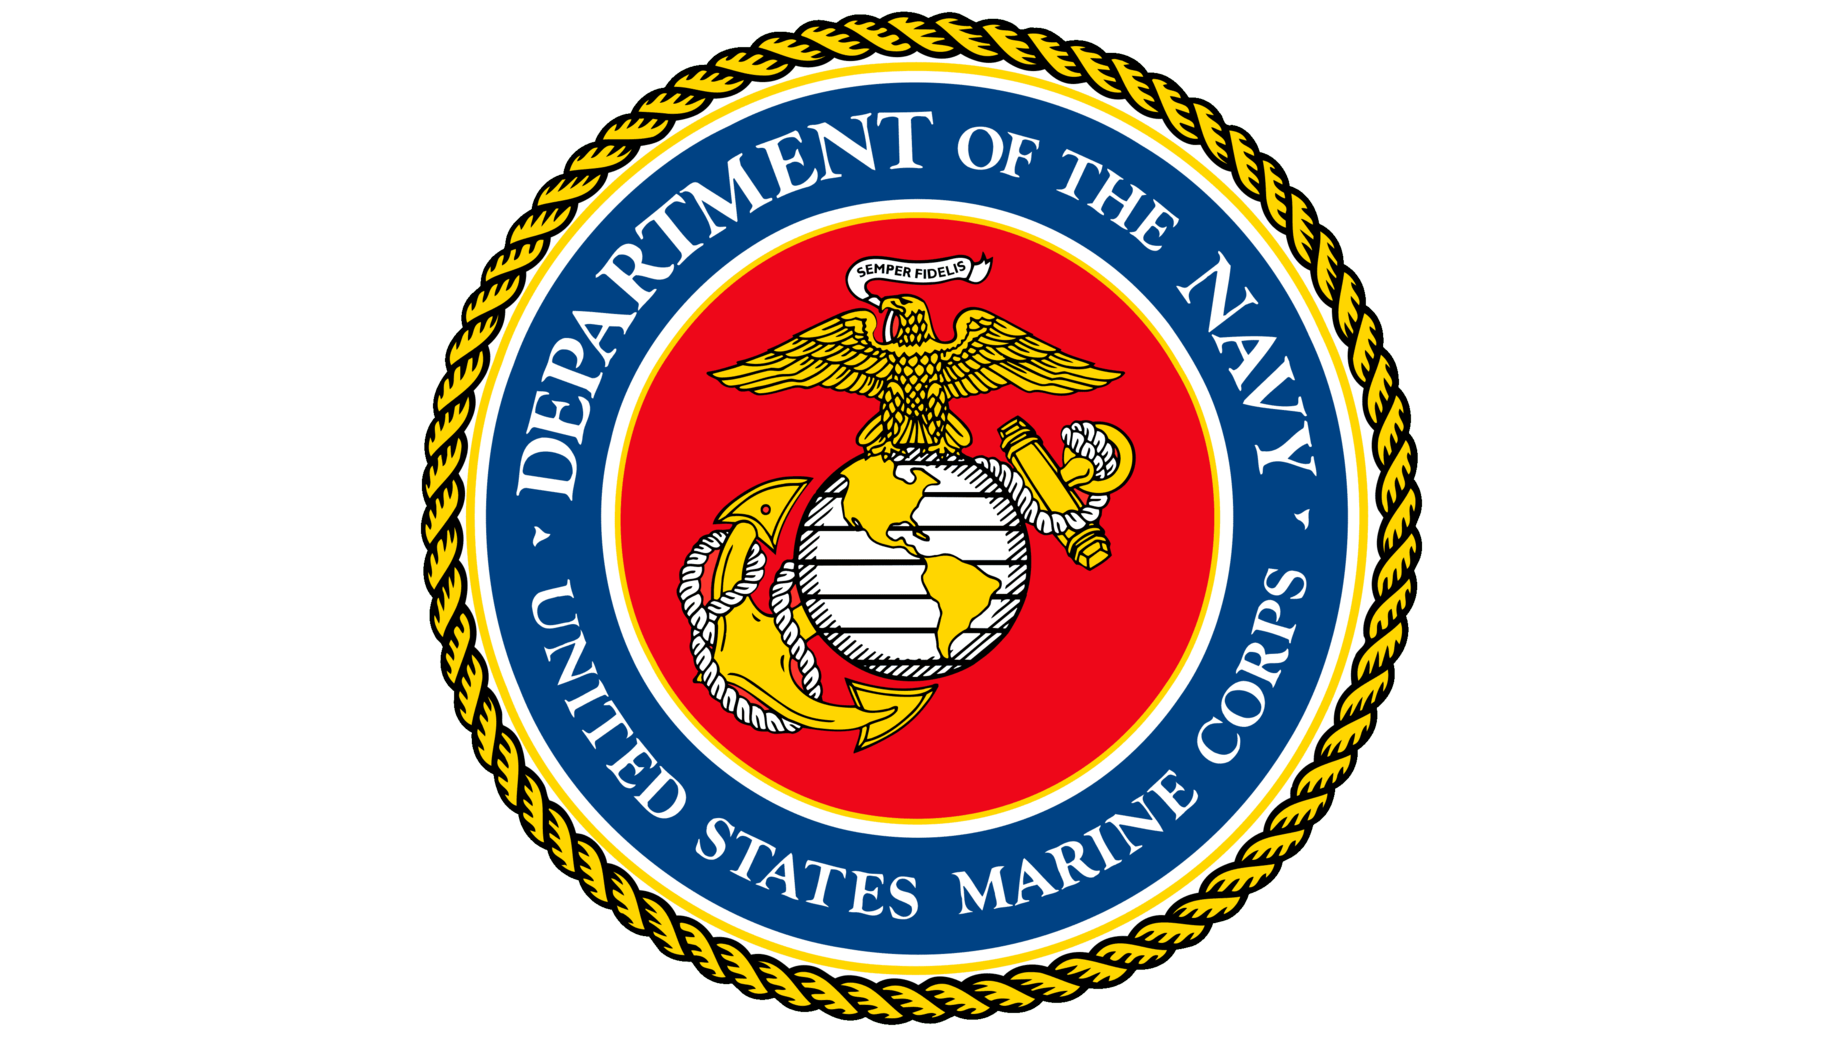 United states marine corps sign 1775 present